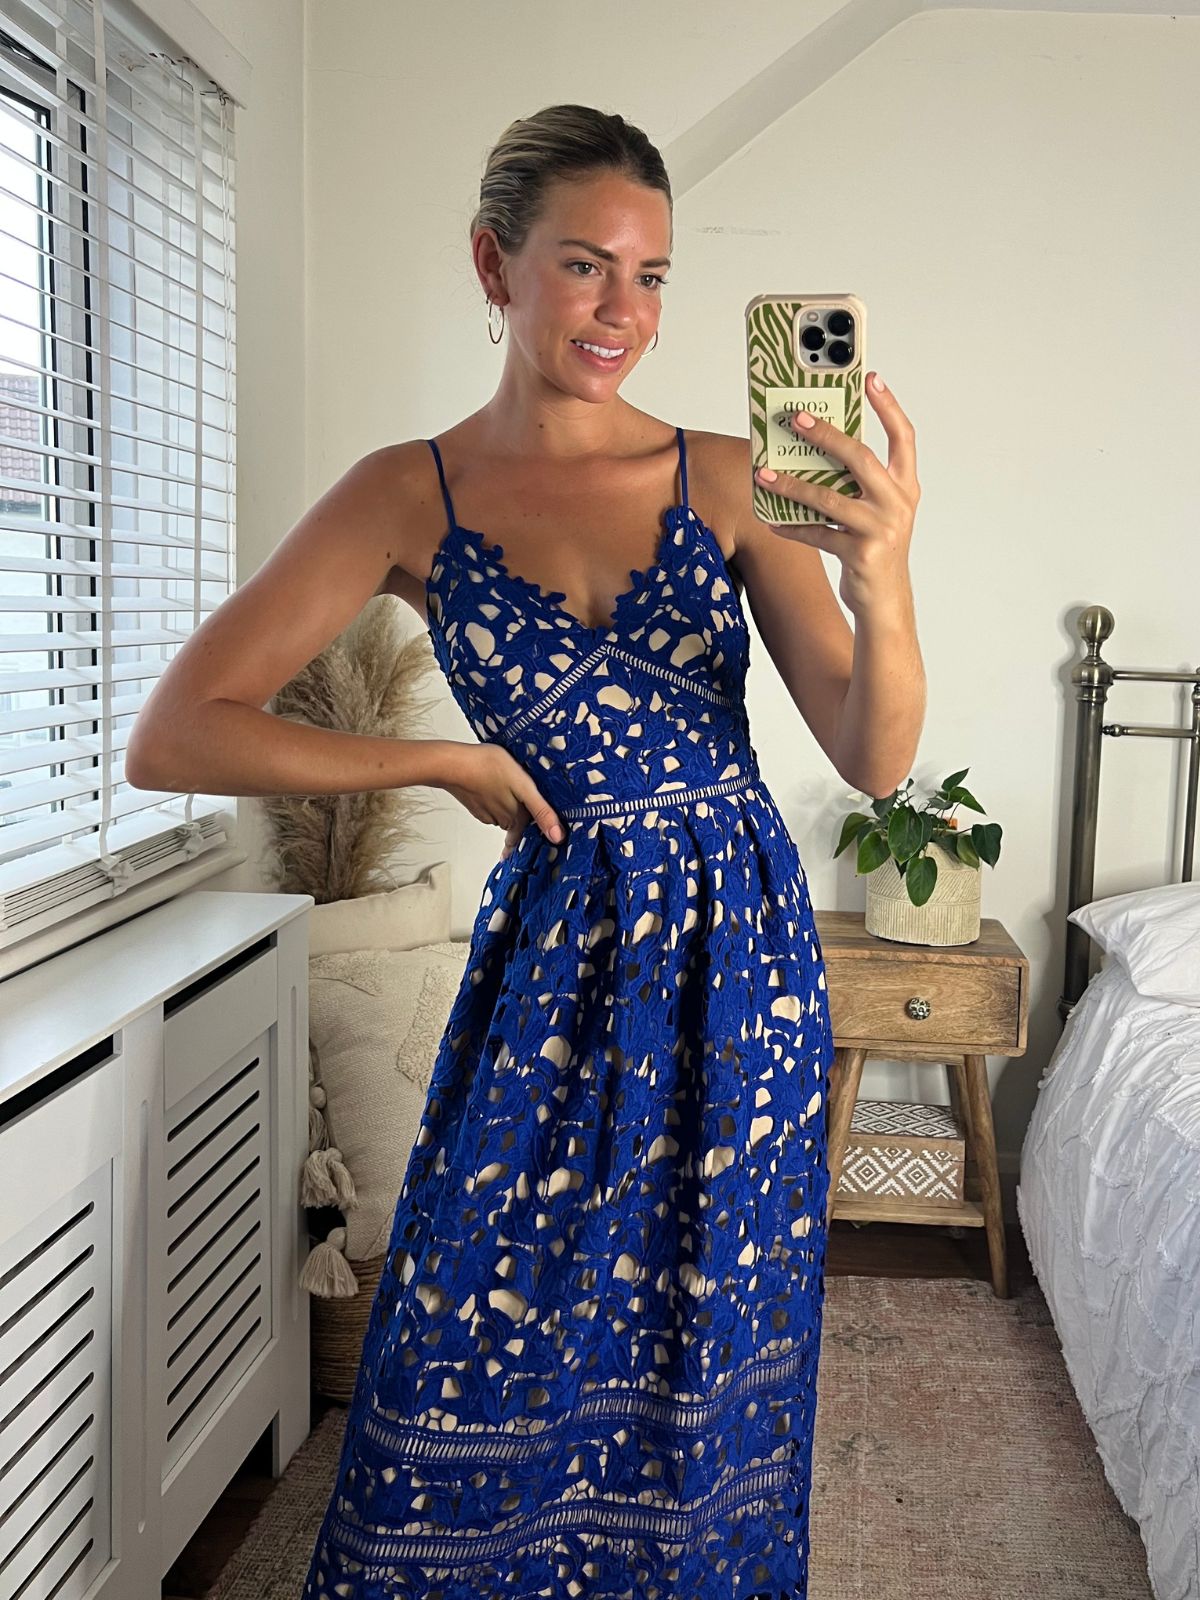 Blue Lace Midi Dress